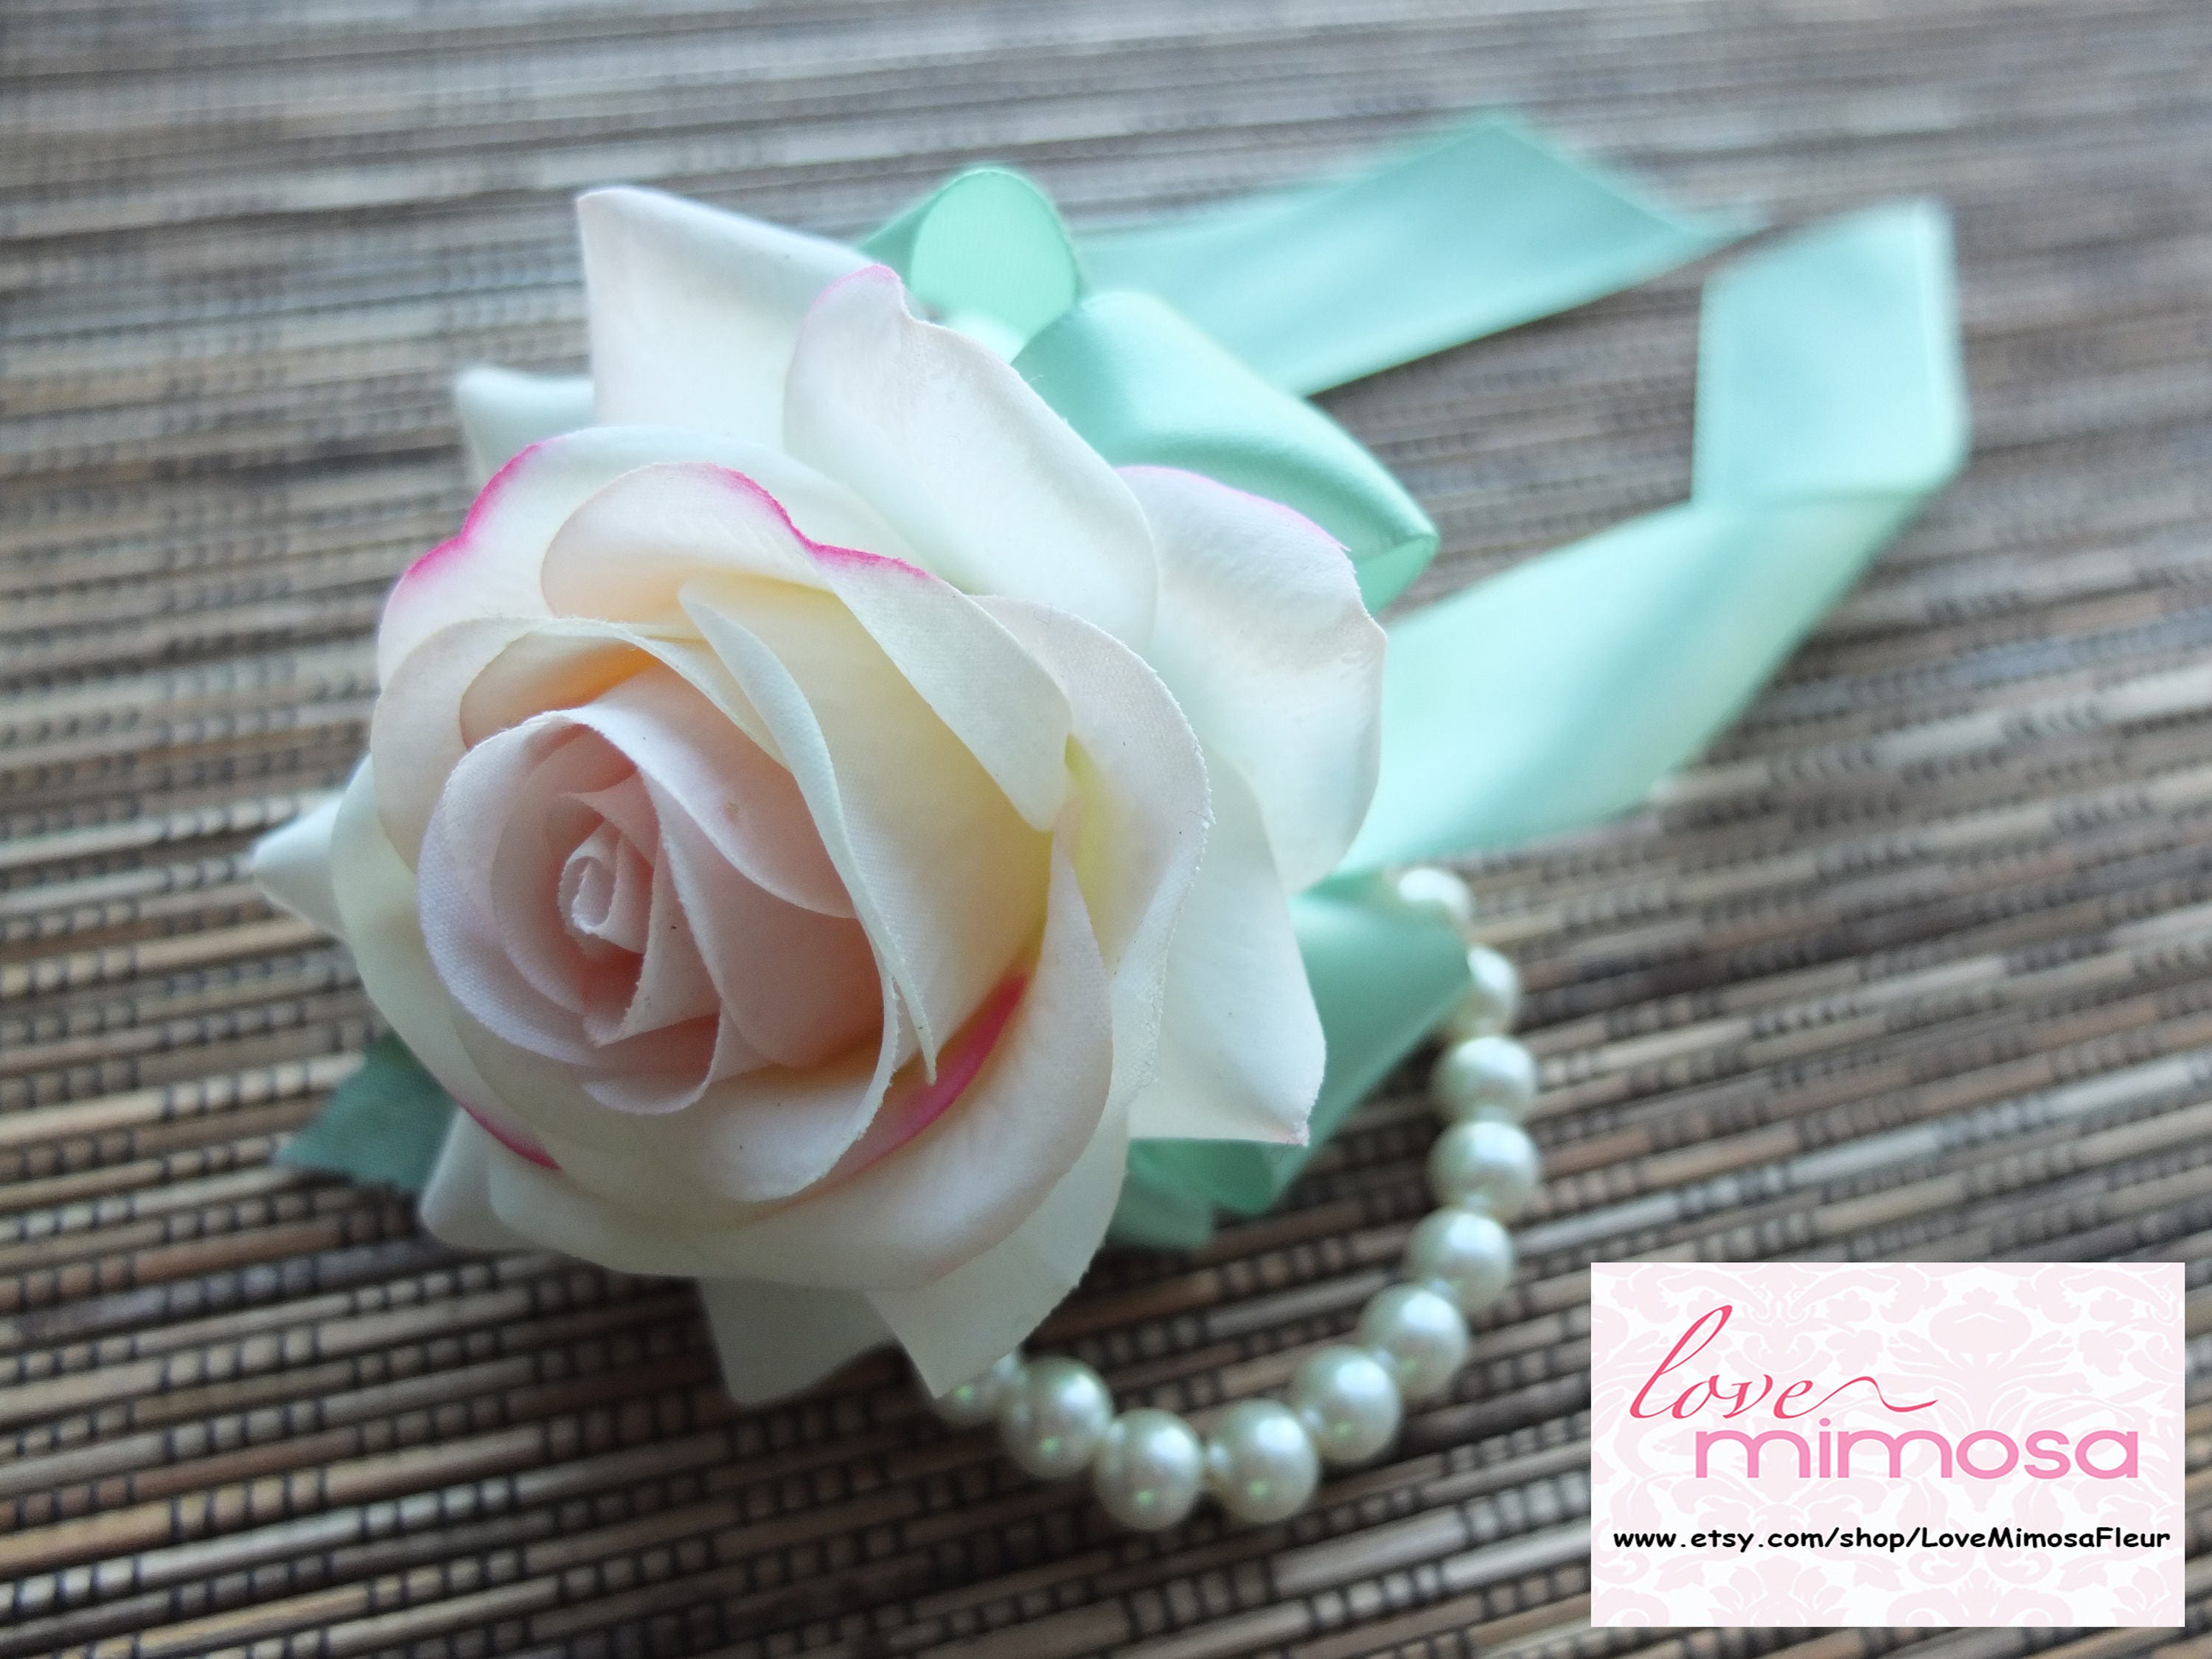 blush pink rose wedding corsage artificial flower corsage Wedding corsage pearl wrist corsage bridesmaid corsage